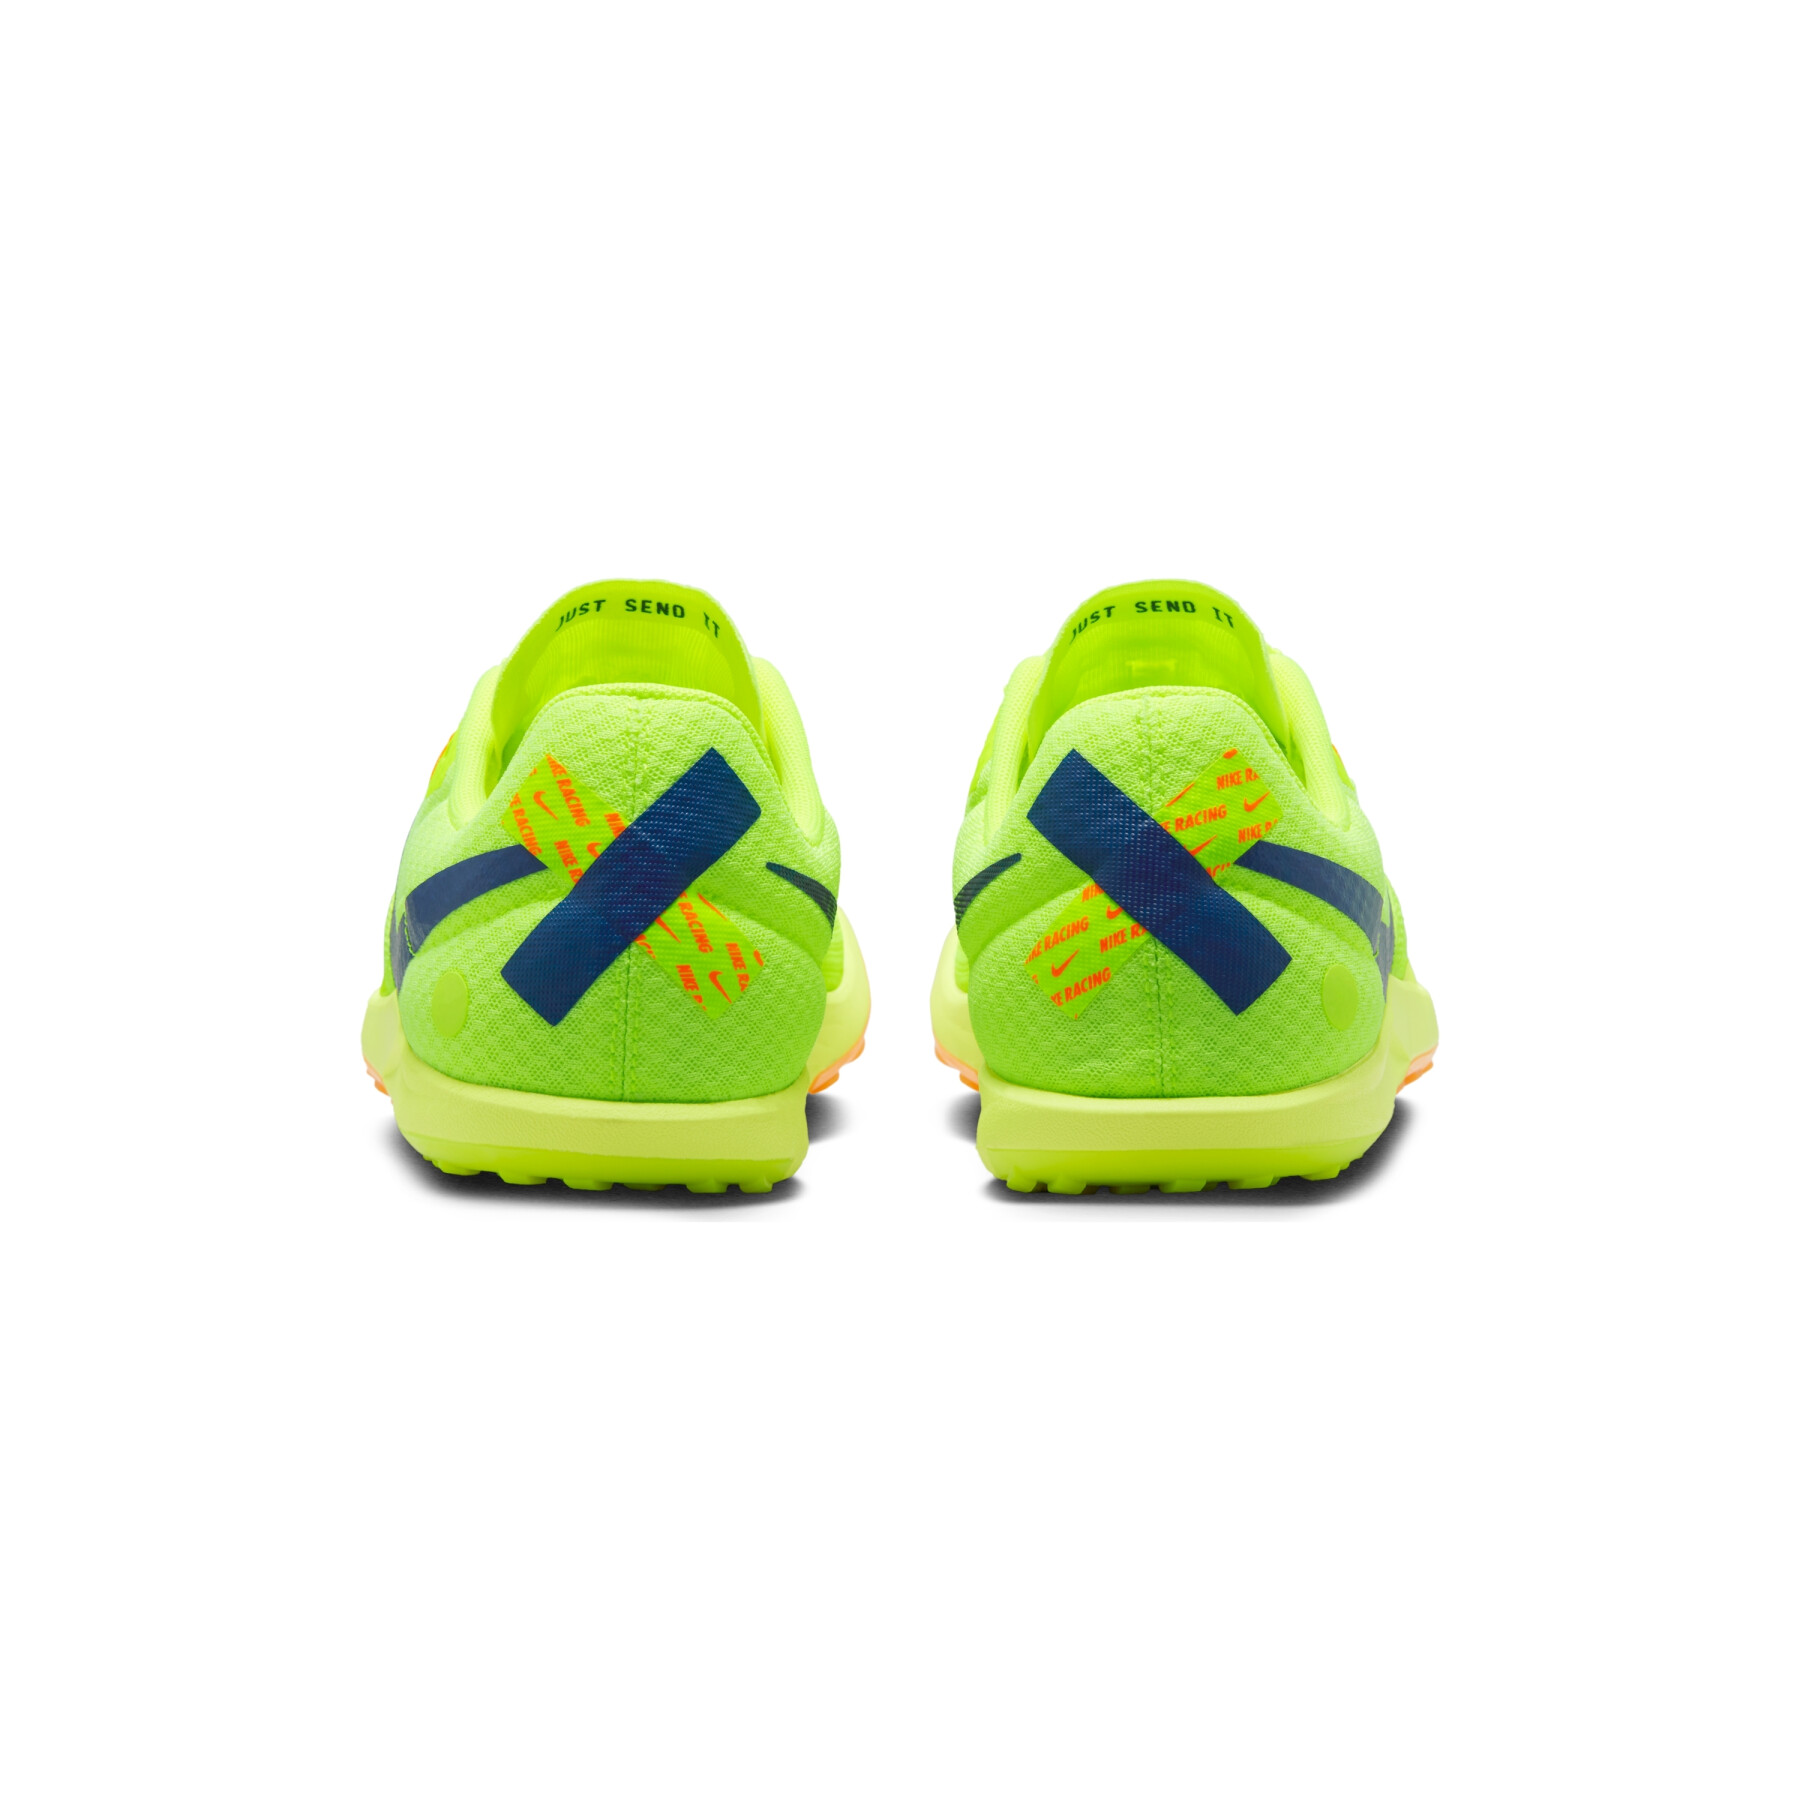 Cross training schoenen Nike Rival XC 6